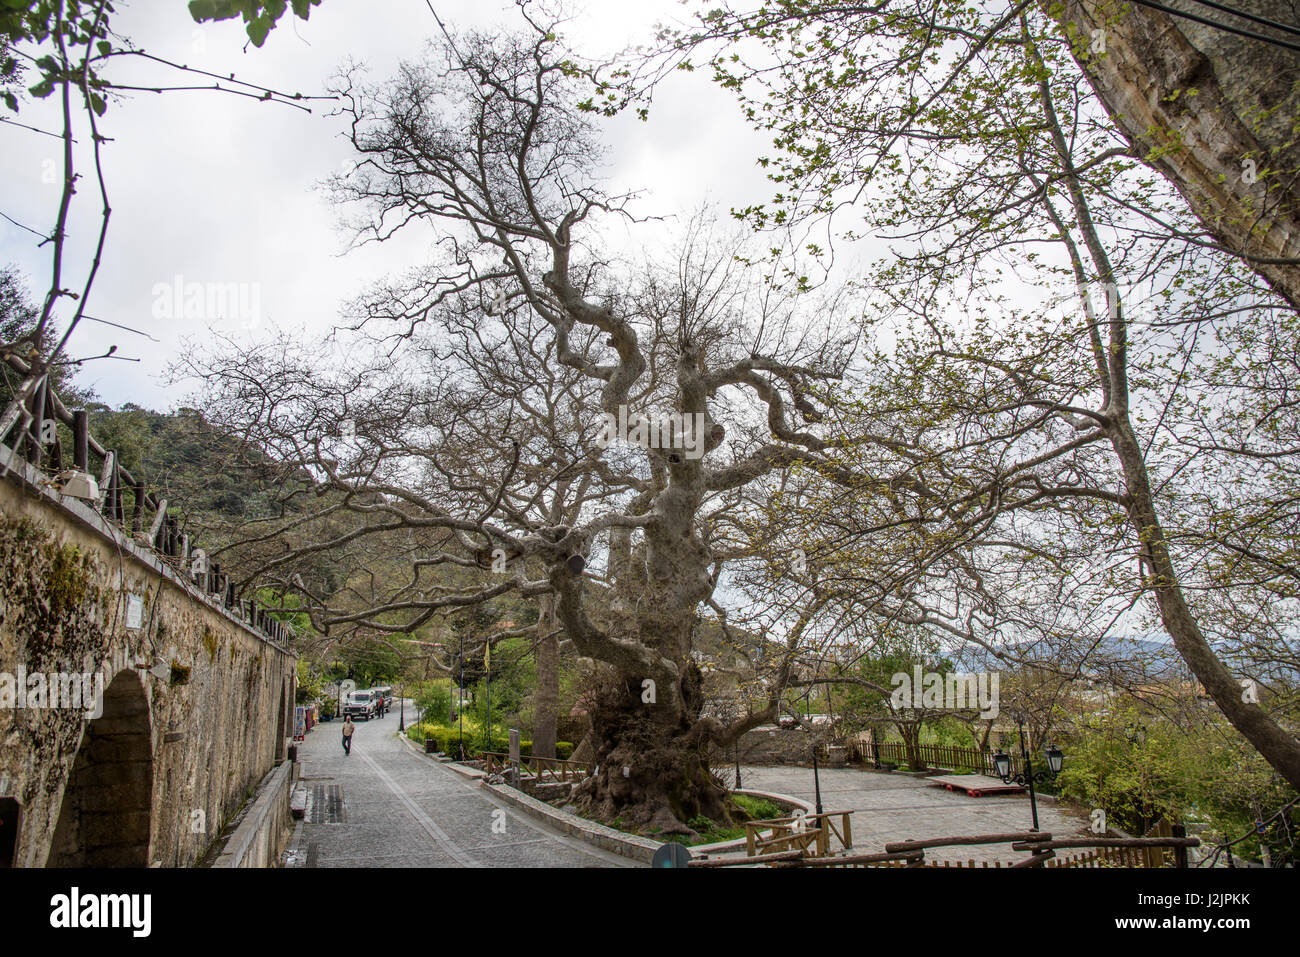 The Monumental Plane Tree at Hersonissos, Lasithi region of Crete. Stock Photo